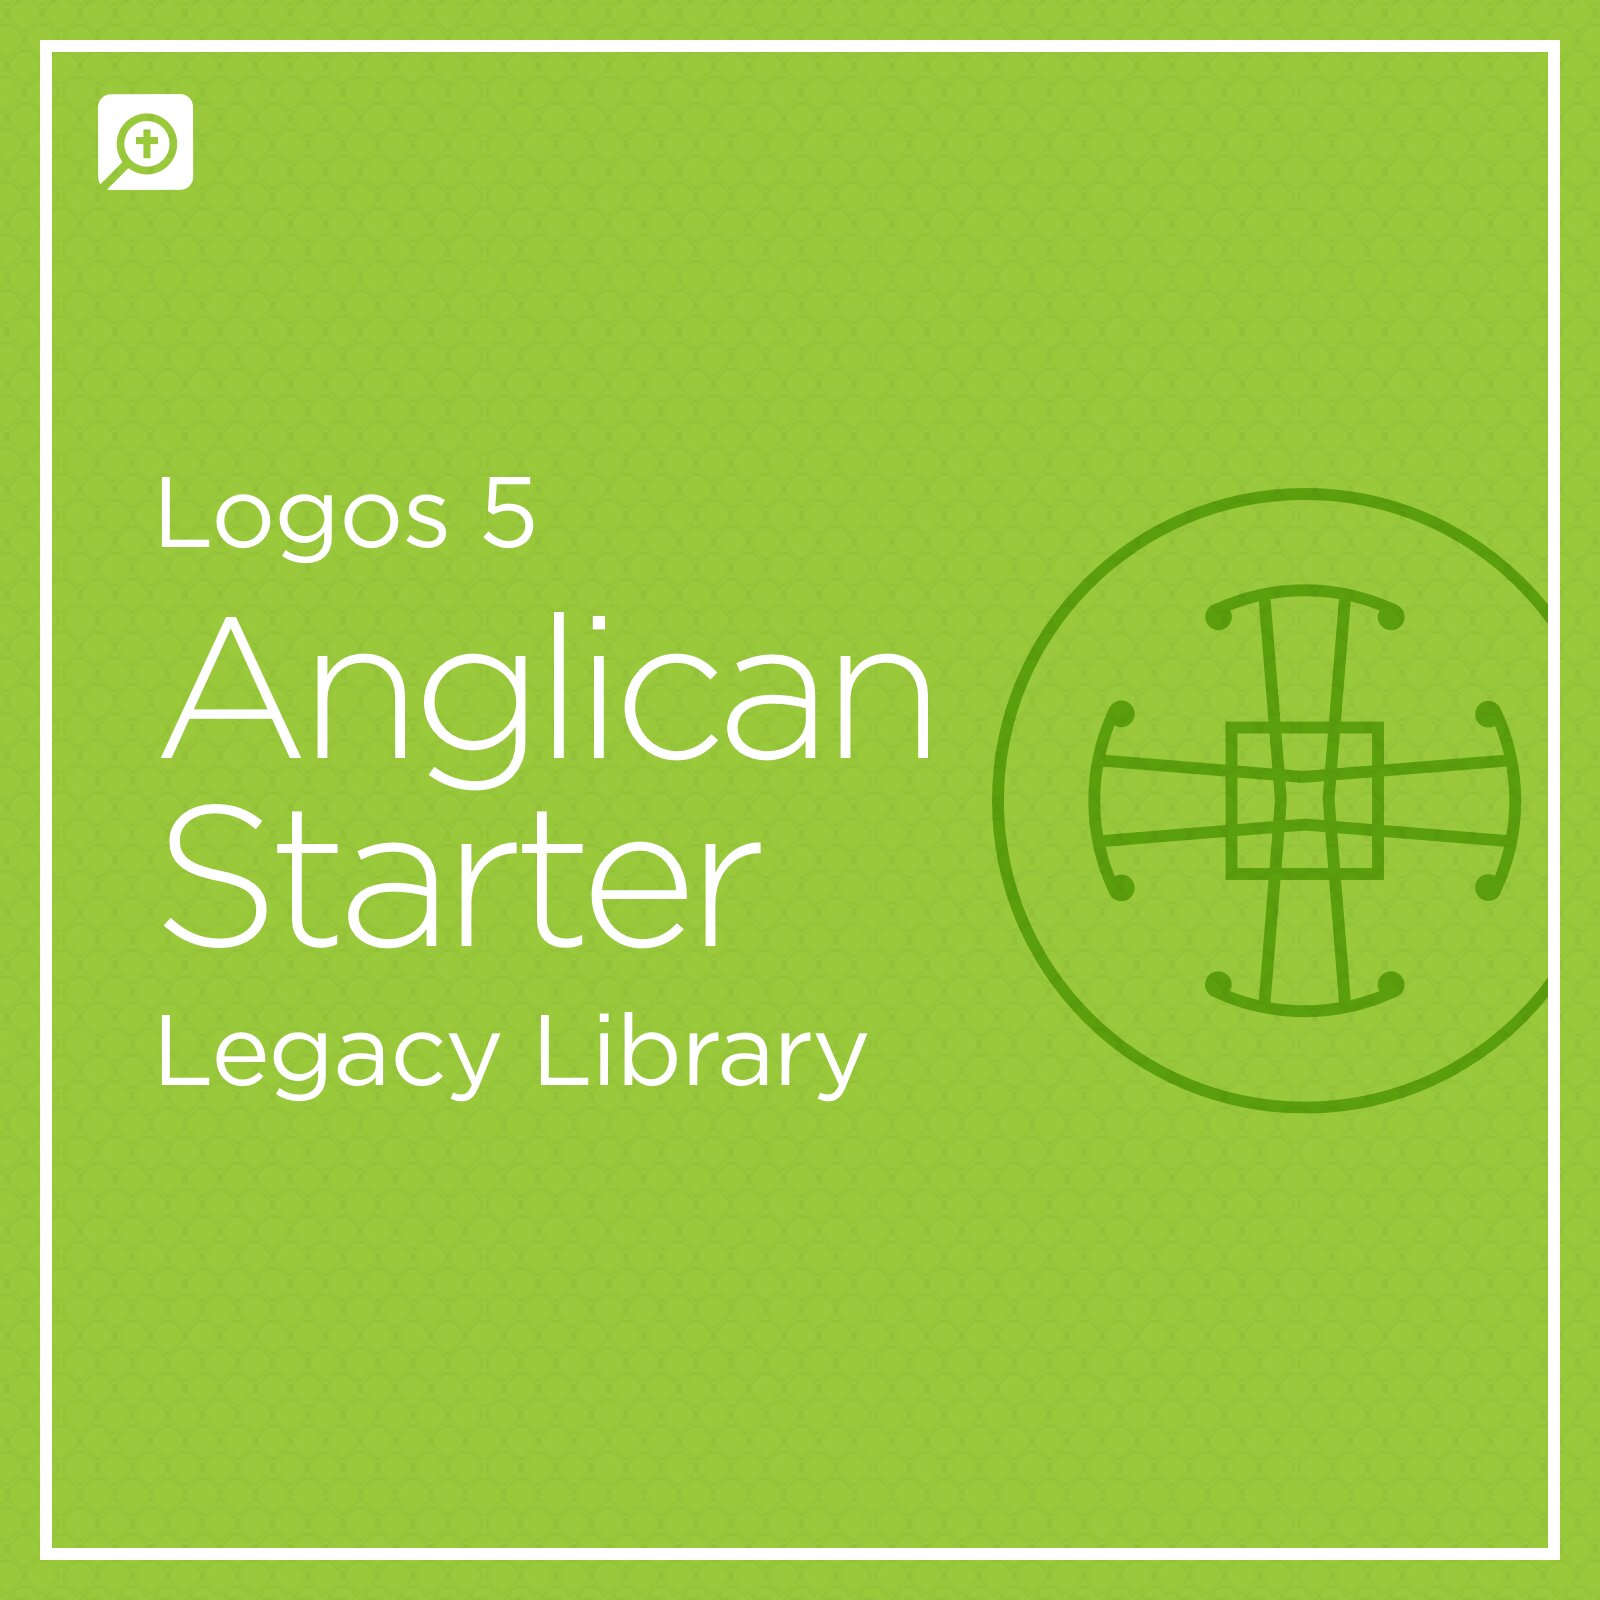 Logos 5 Anglican Starter Legacy Library